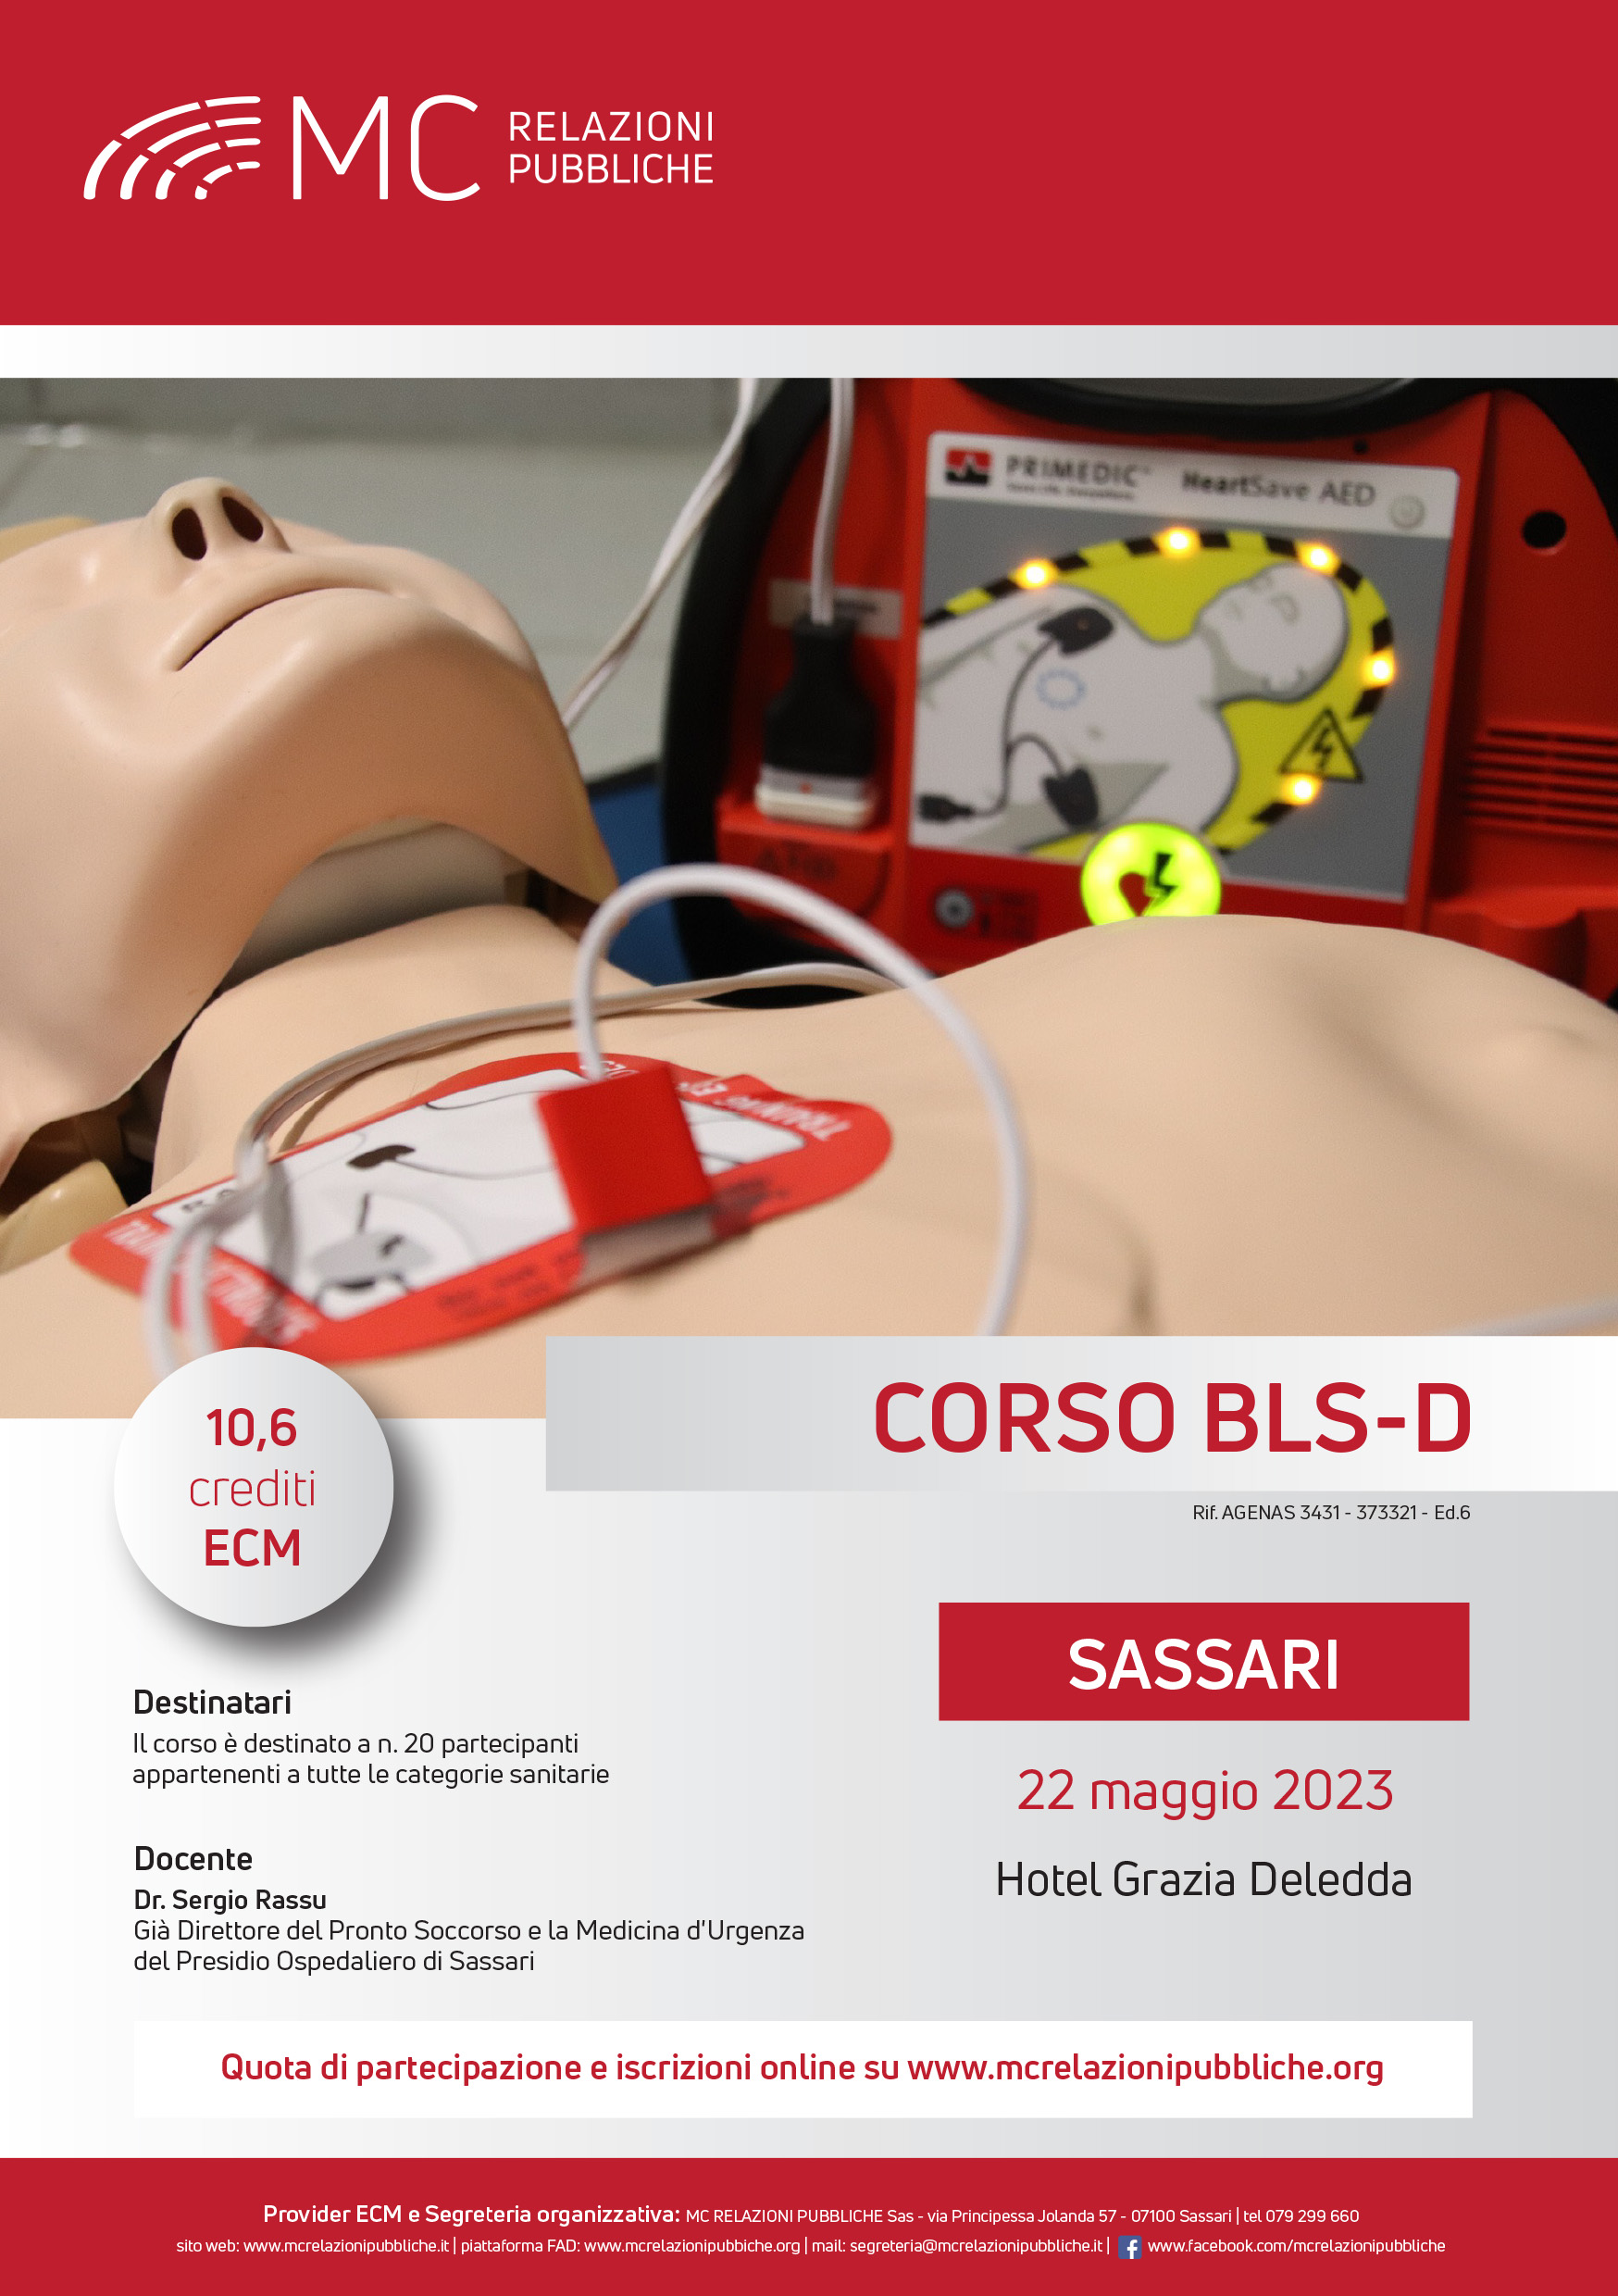 Corso BLS-D. Basic Life Support-Defibrillation - 22 maggio 2023